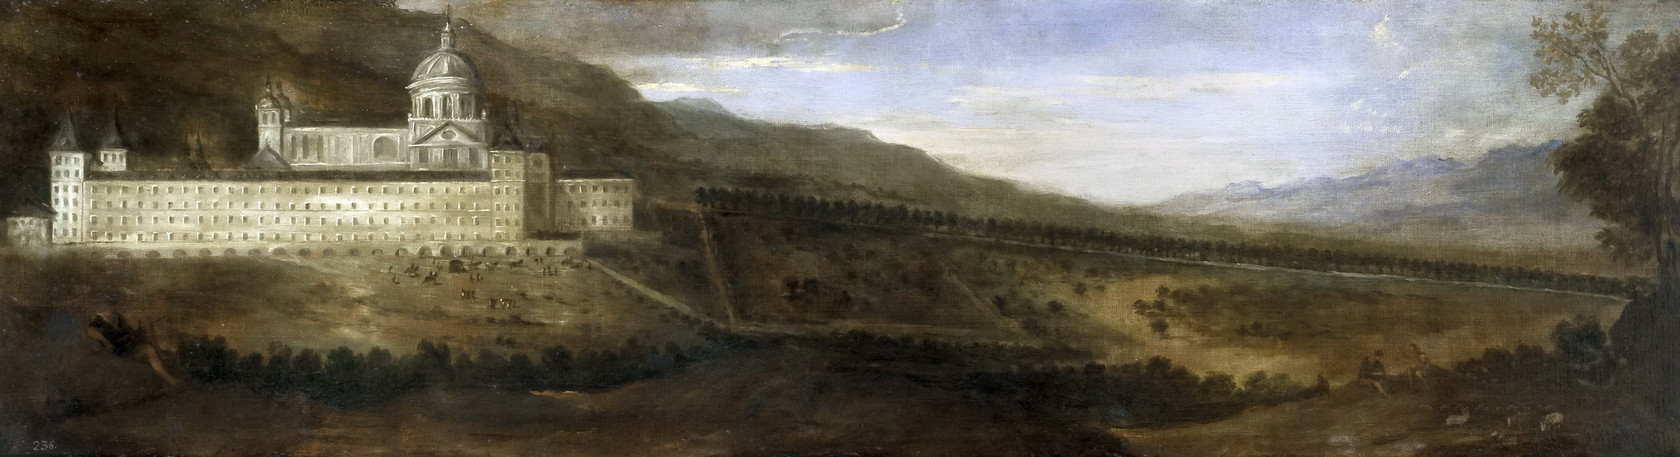 Картина Вид на монастырь Эскориал - Музей Прадо